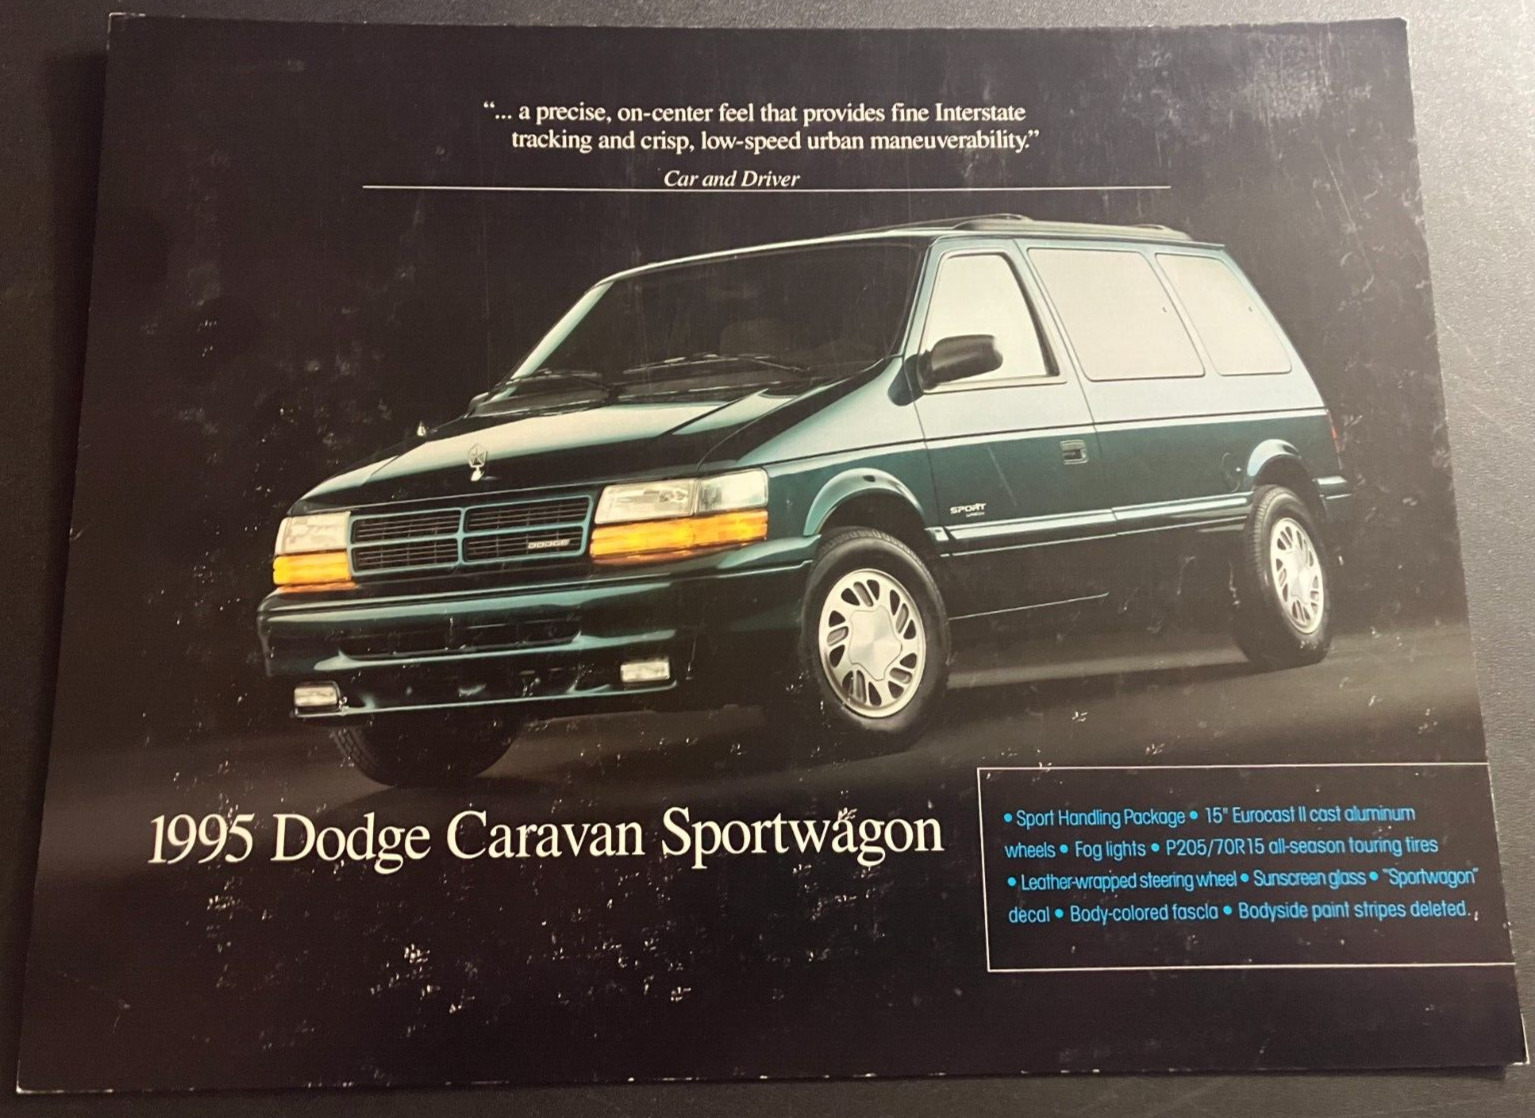 1995 Dodge Caravan Sportwagon - Vintage 2-Sided Dealer Sales Print Ad Brochure